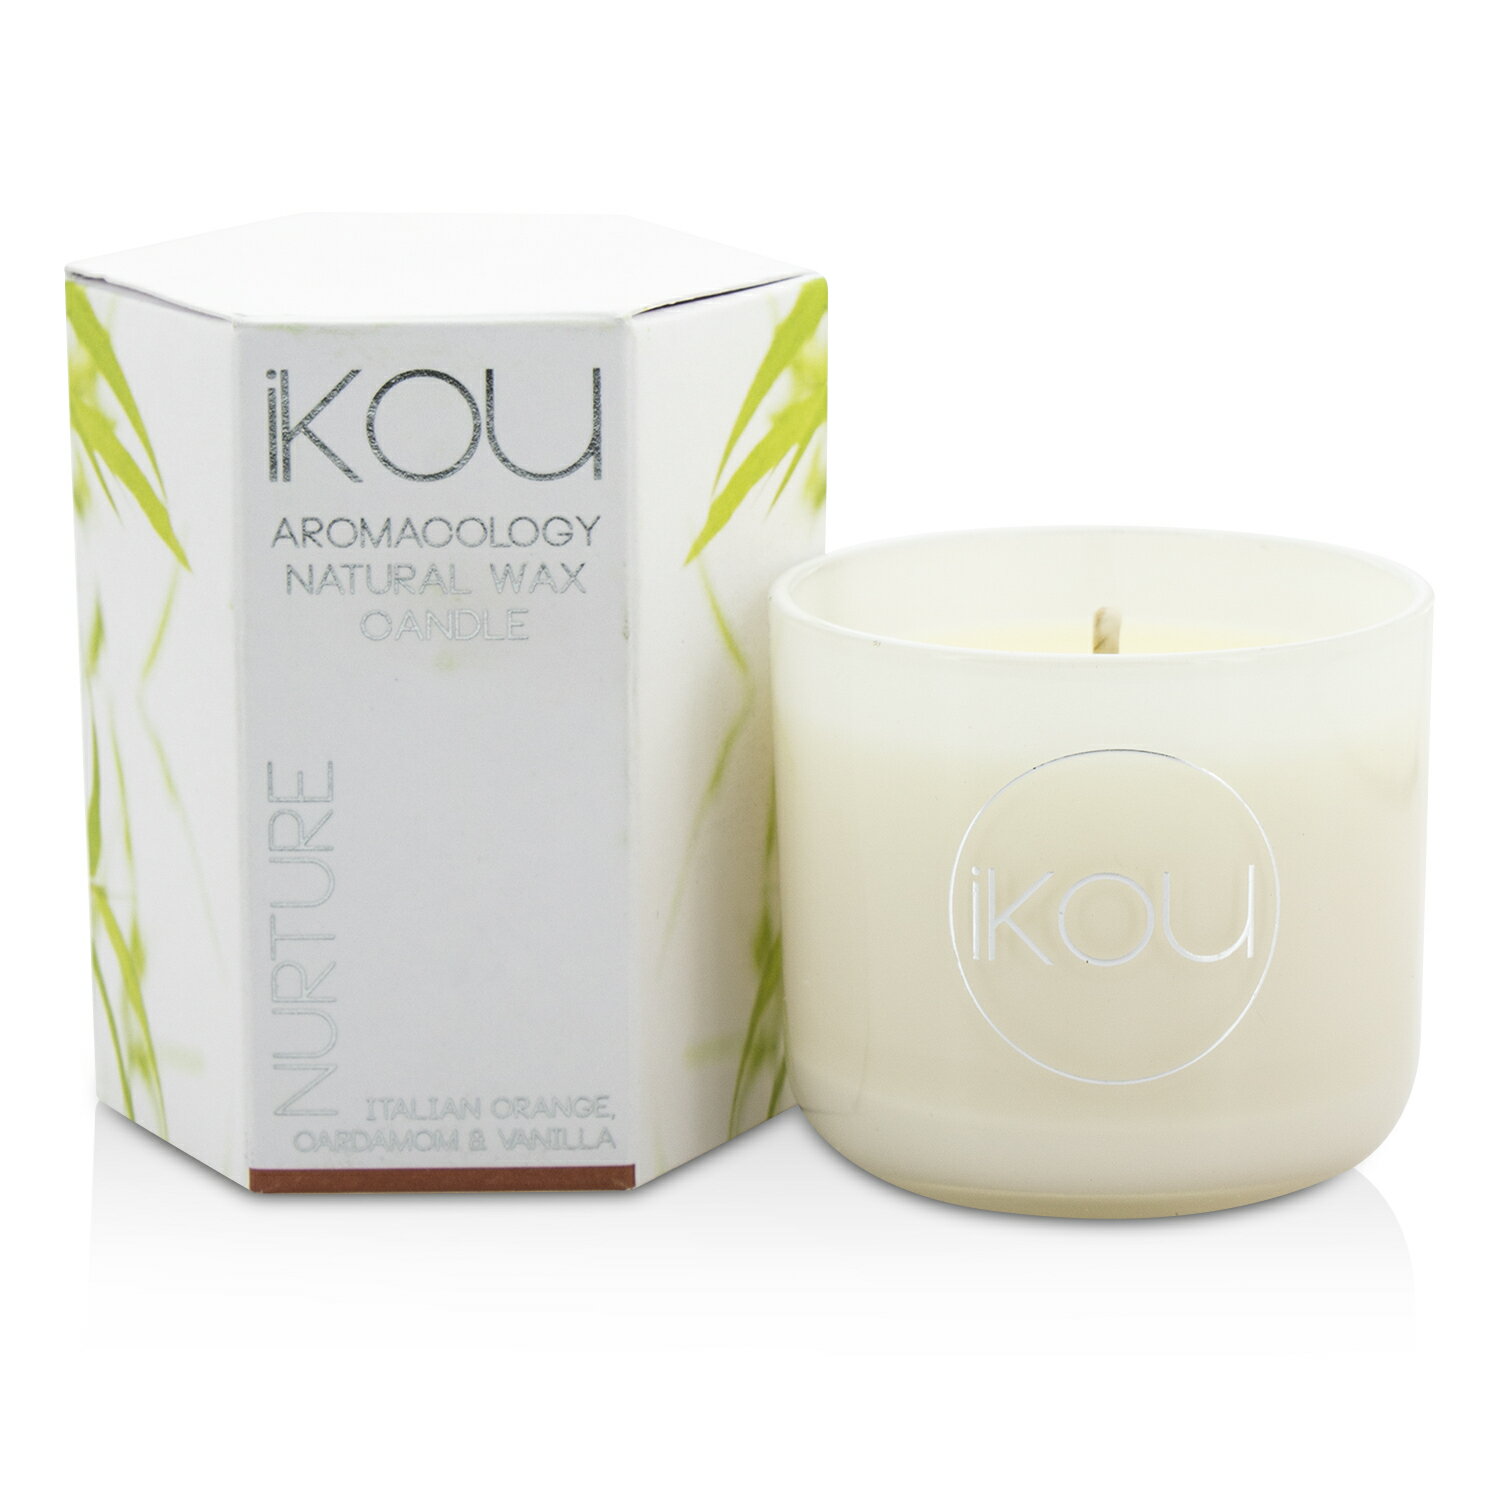 iKOU - Aromacology天然蠟蠟燭-培育(義大利橙荳蔻&香草)Eco-Luxury Aromacology Natural Wax Candle Glass - Nurture (Italian Orange Cardamom & Vanilla)